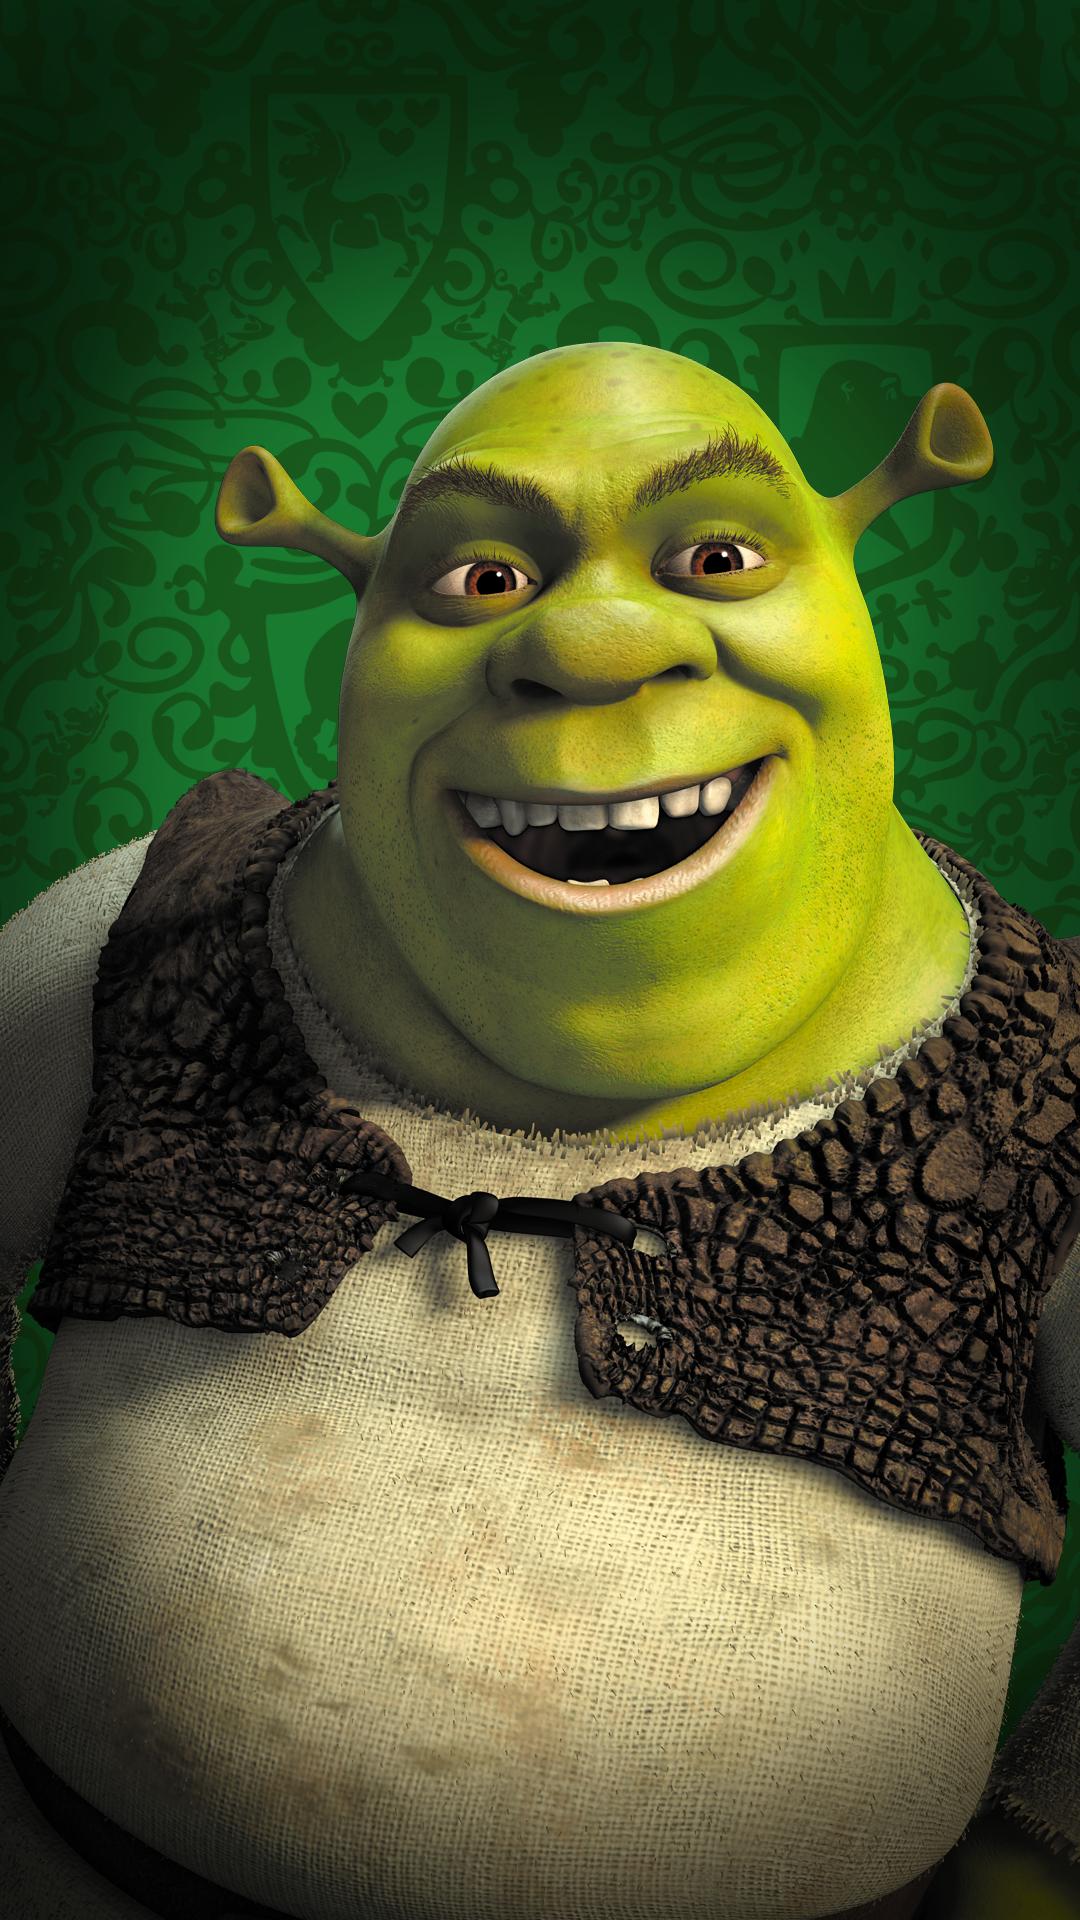 DreamWorks Animation Your Favorite Wallpaper To Shrek Ify Your Phone Background! #Shrek